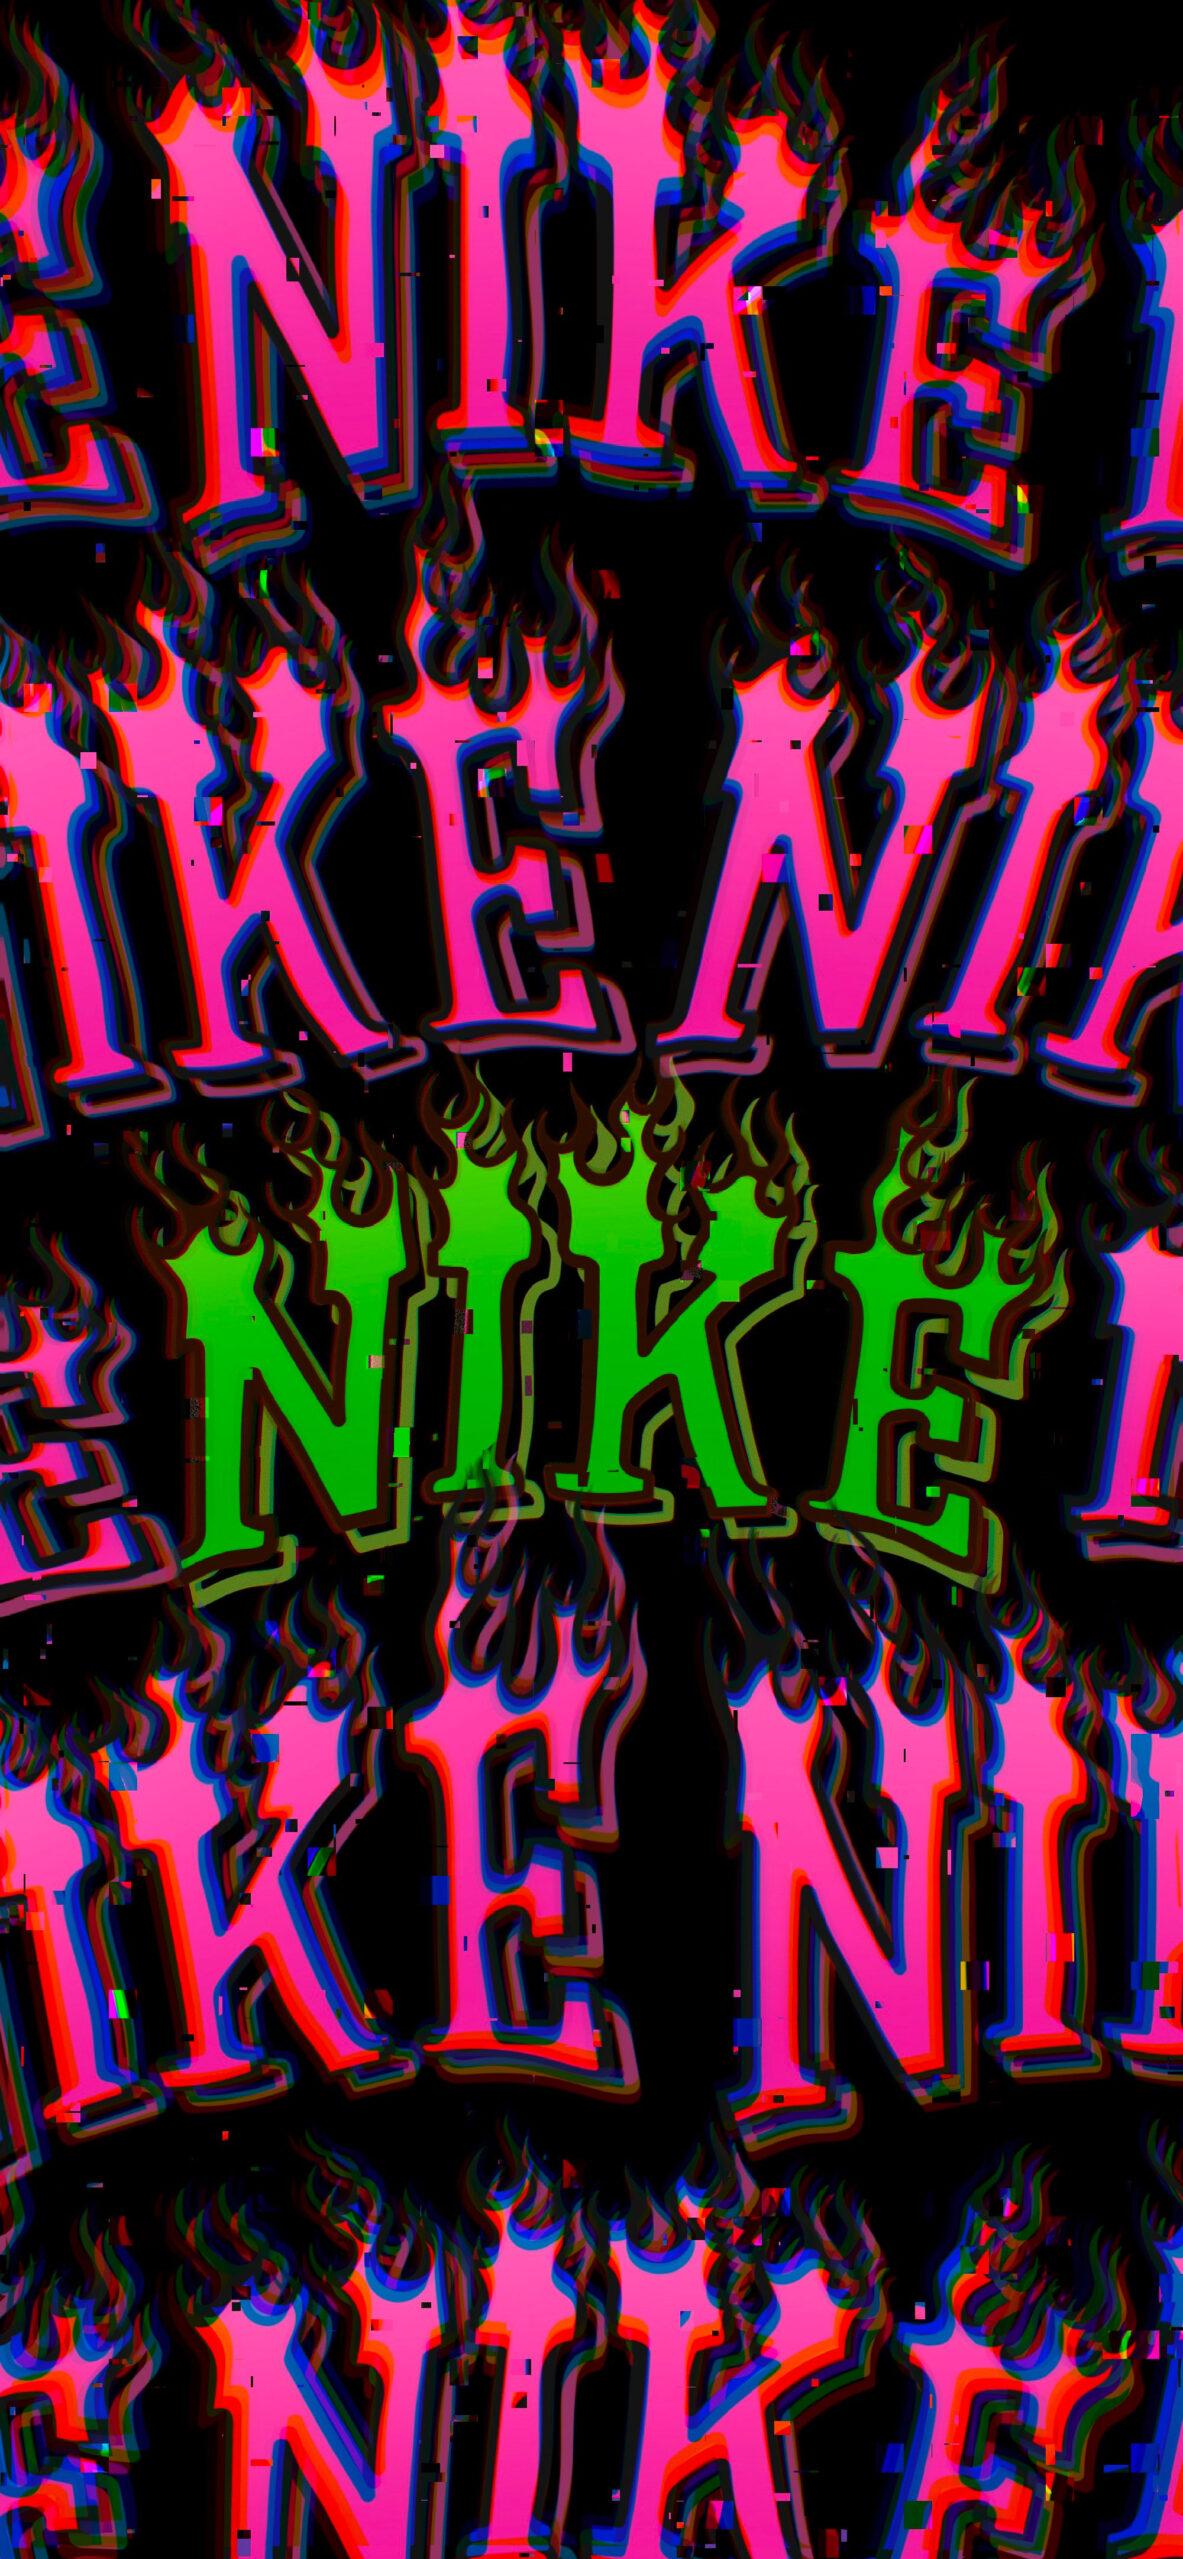 Black Nike Wallpaper With Flame Logo iPhone HD